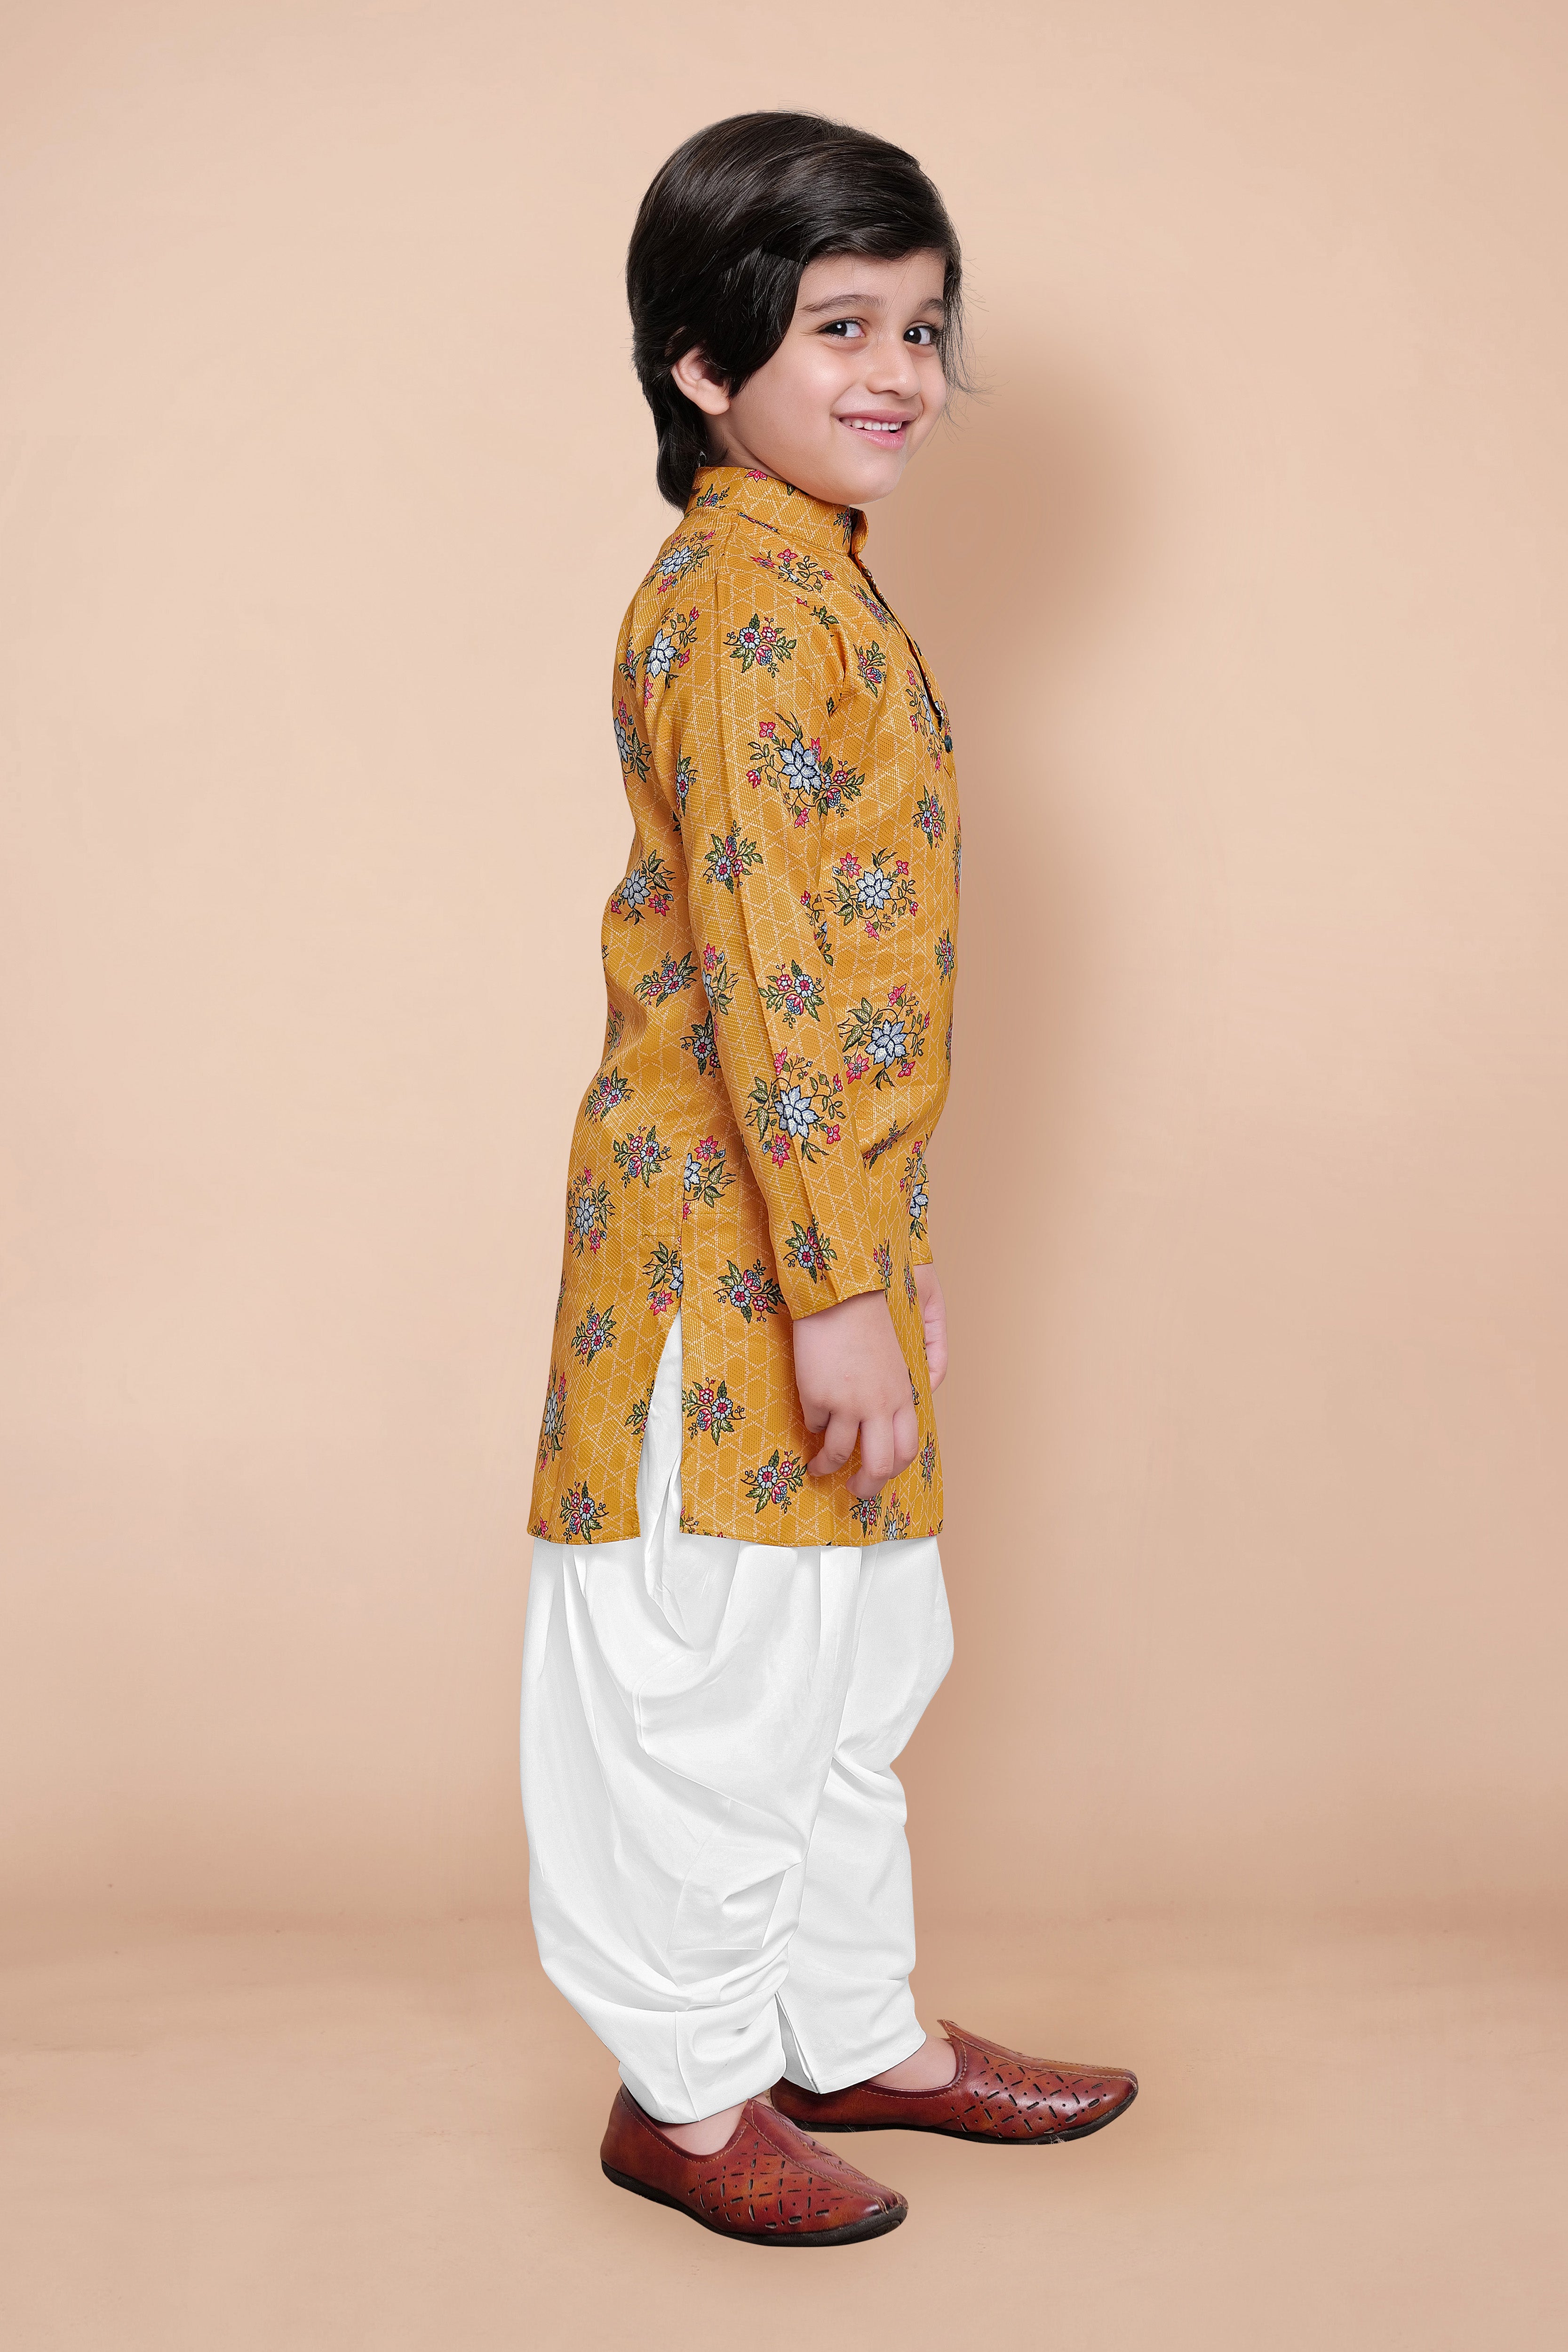 Diwali Kids Fashion: Trending Outfit Ideas For Boys/ Girls